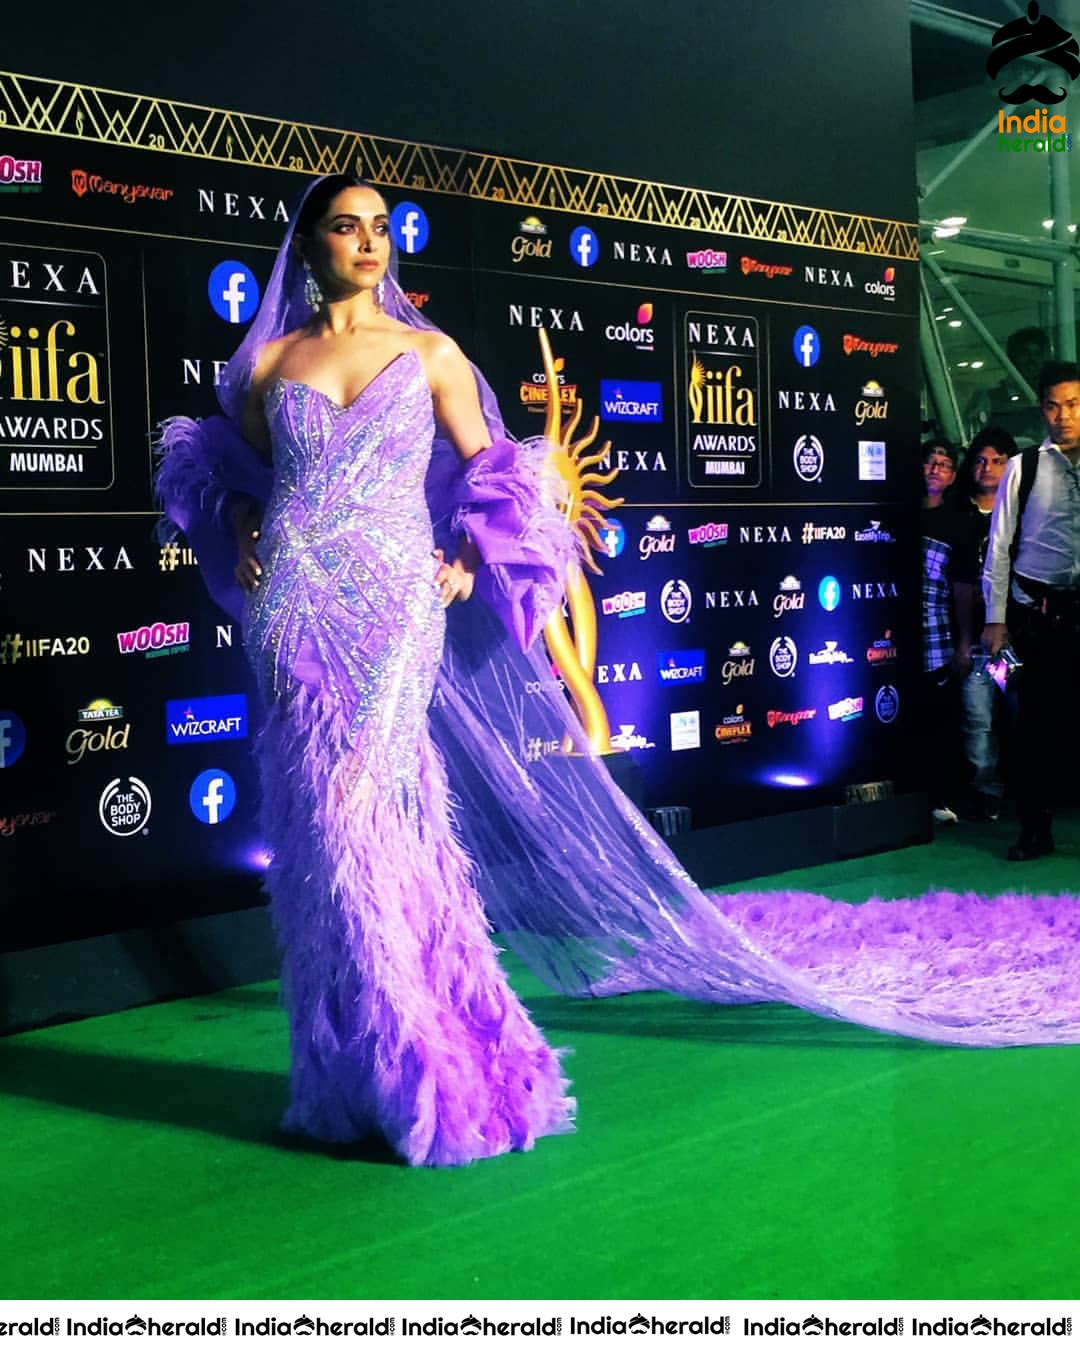 More Tempting Hot Photos Of Deepika Padukone In Purple Sexy Dress Set 1